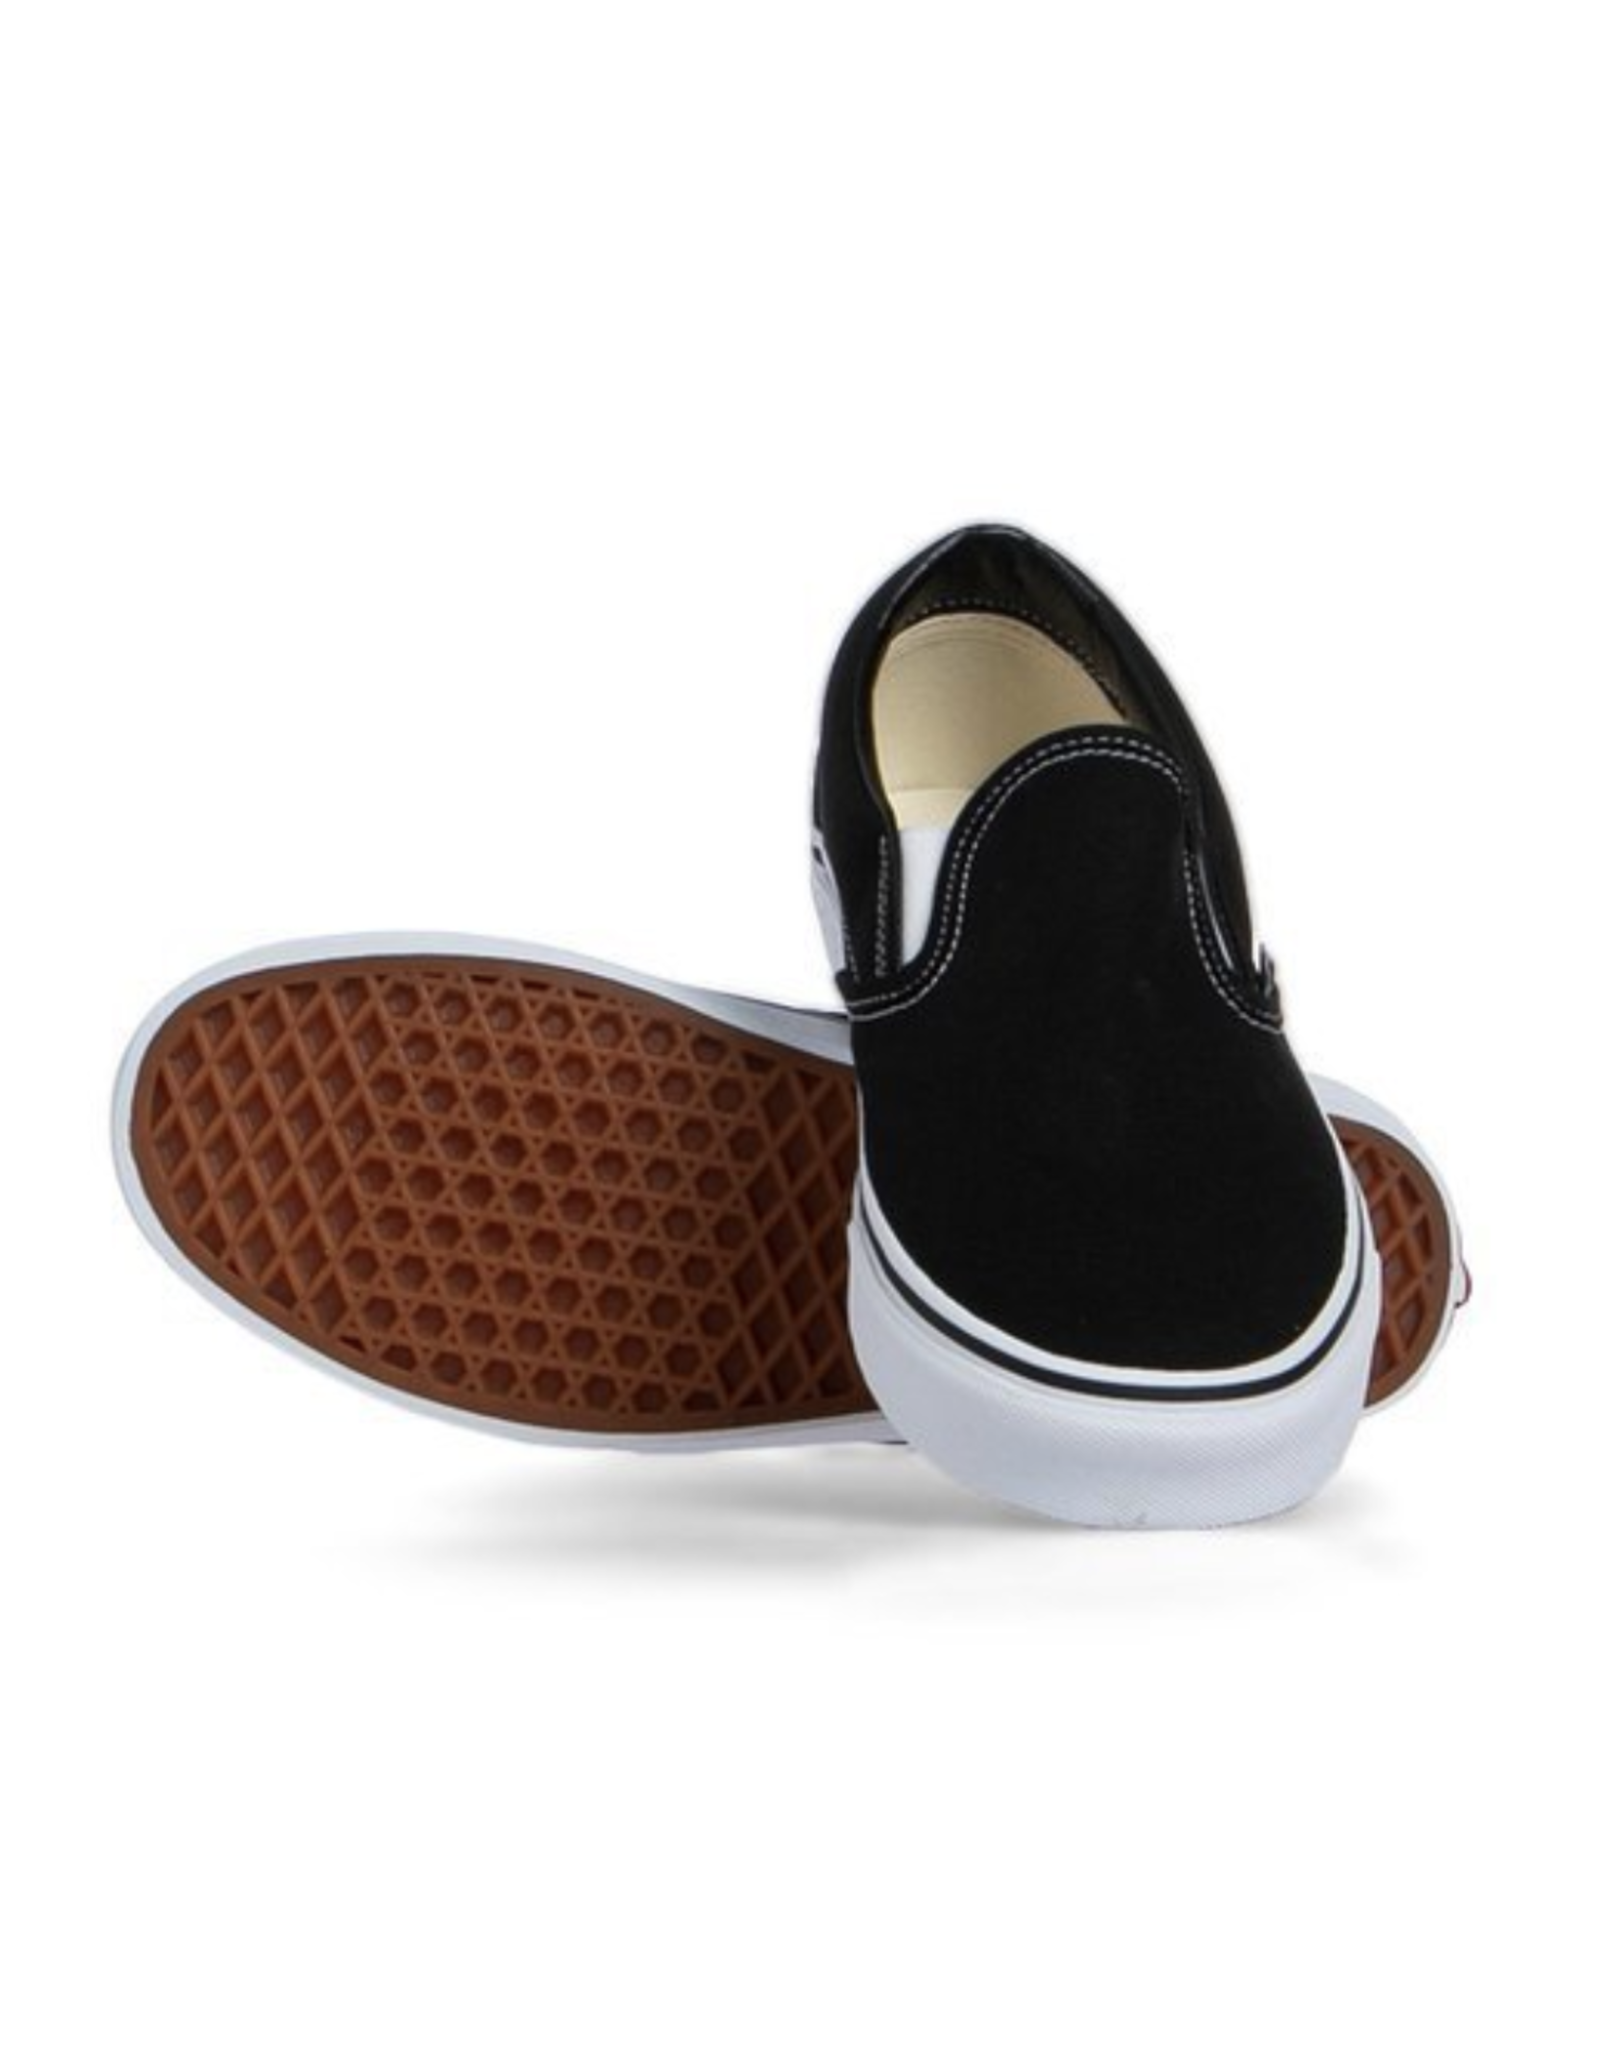 Vans Classic Slip-On Shoes